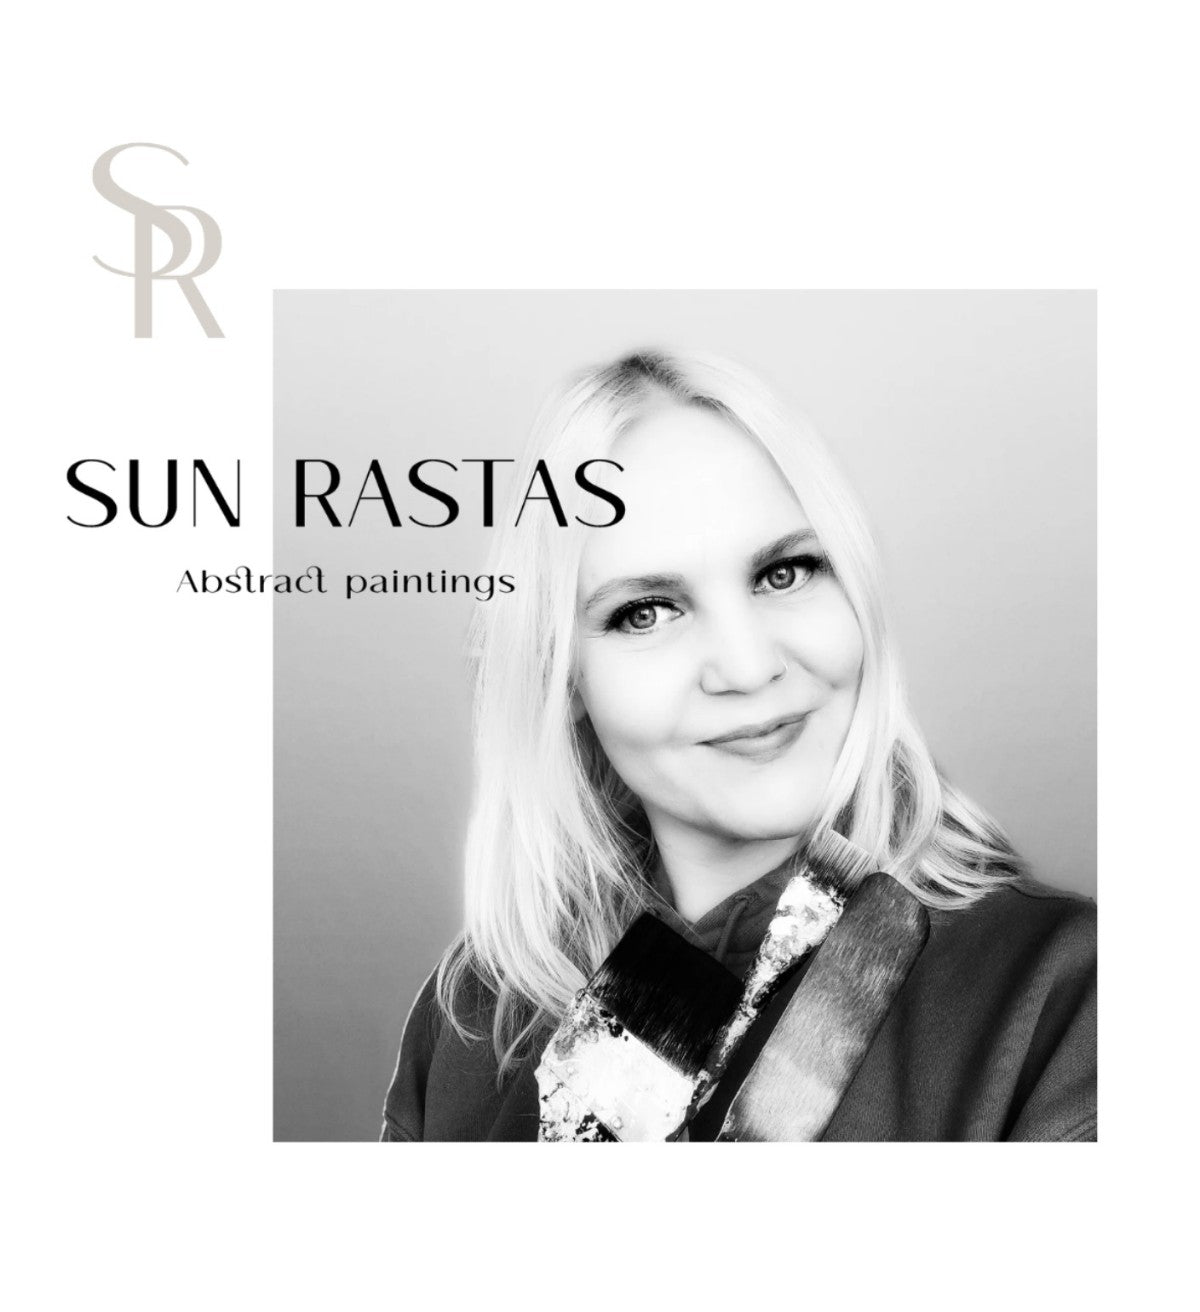 Black and white portrait photo of the female artist Sun Rastas.